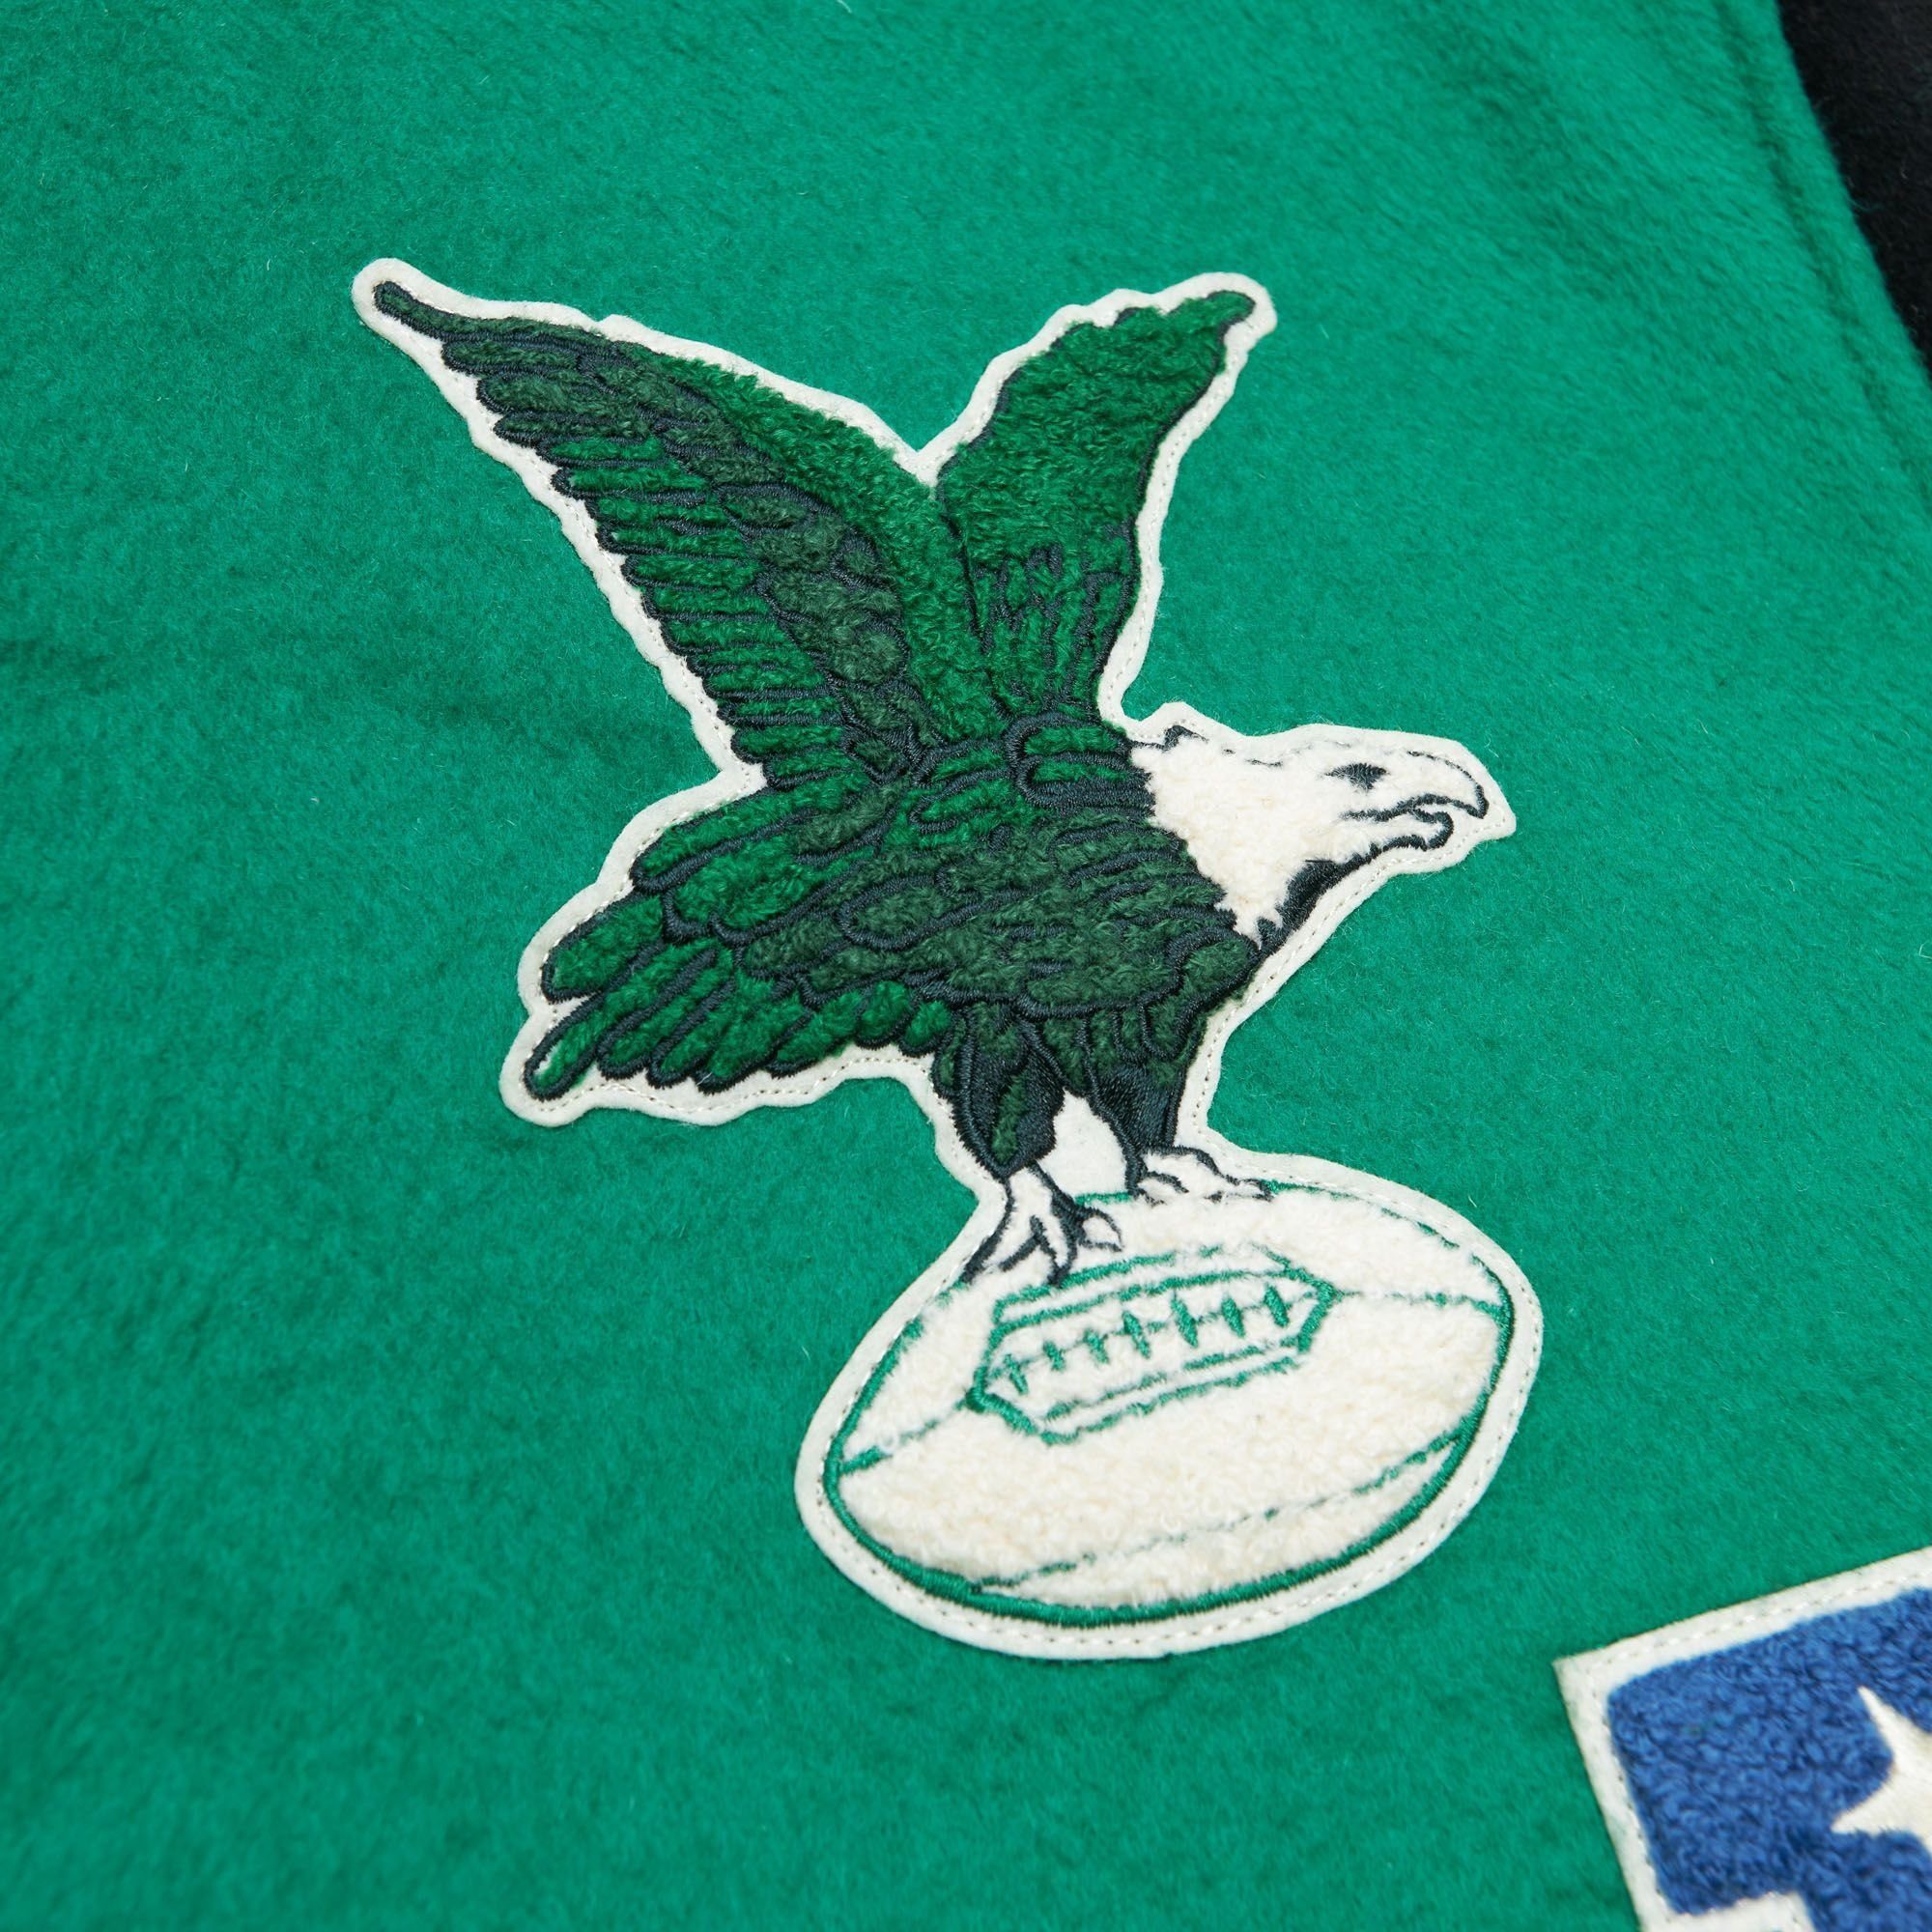 Legacy Ness Collegejacke Wool Eagles Varsity & Mitchell NFL Philadelphia